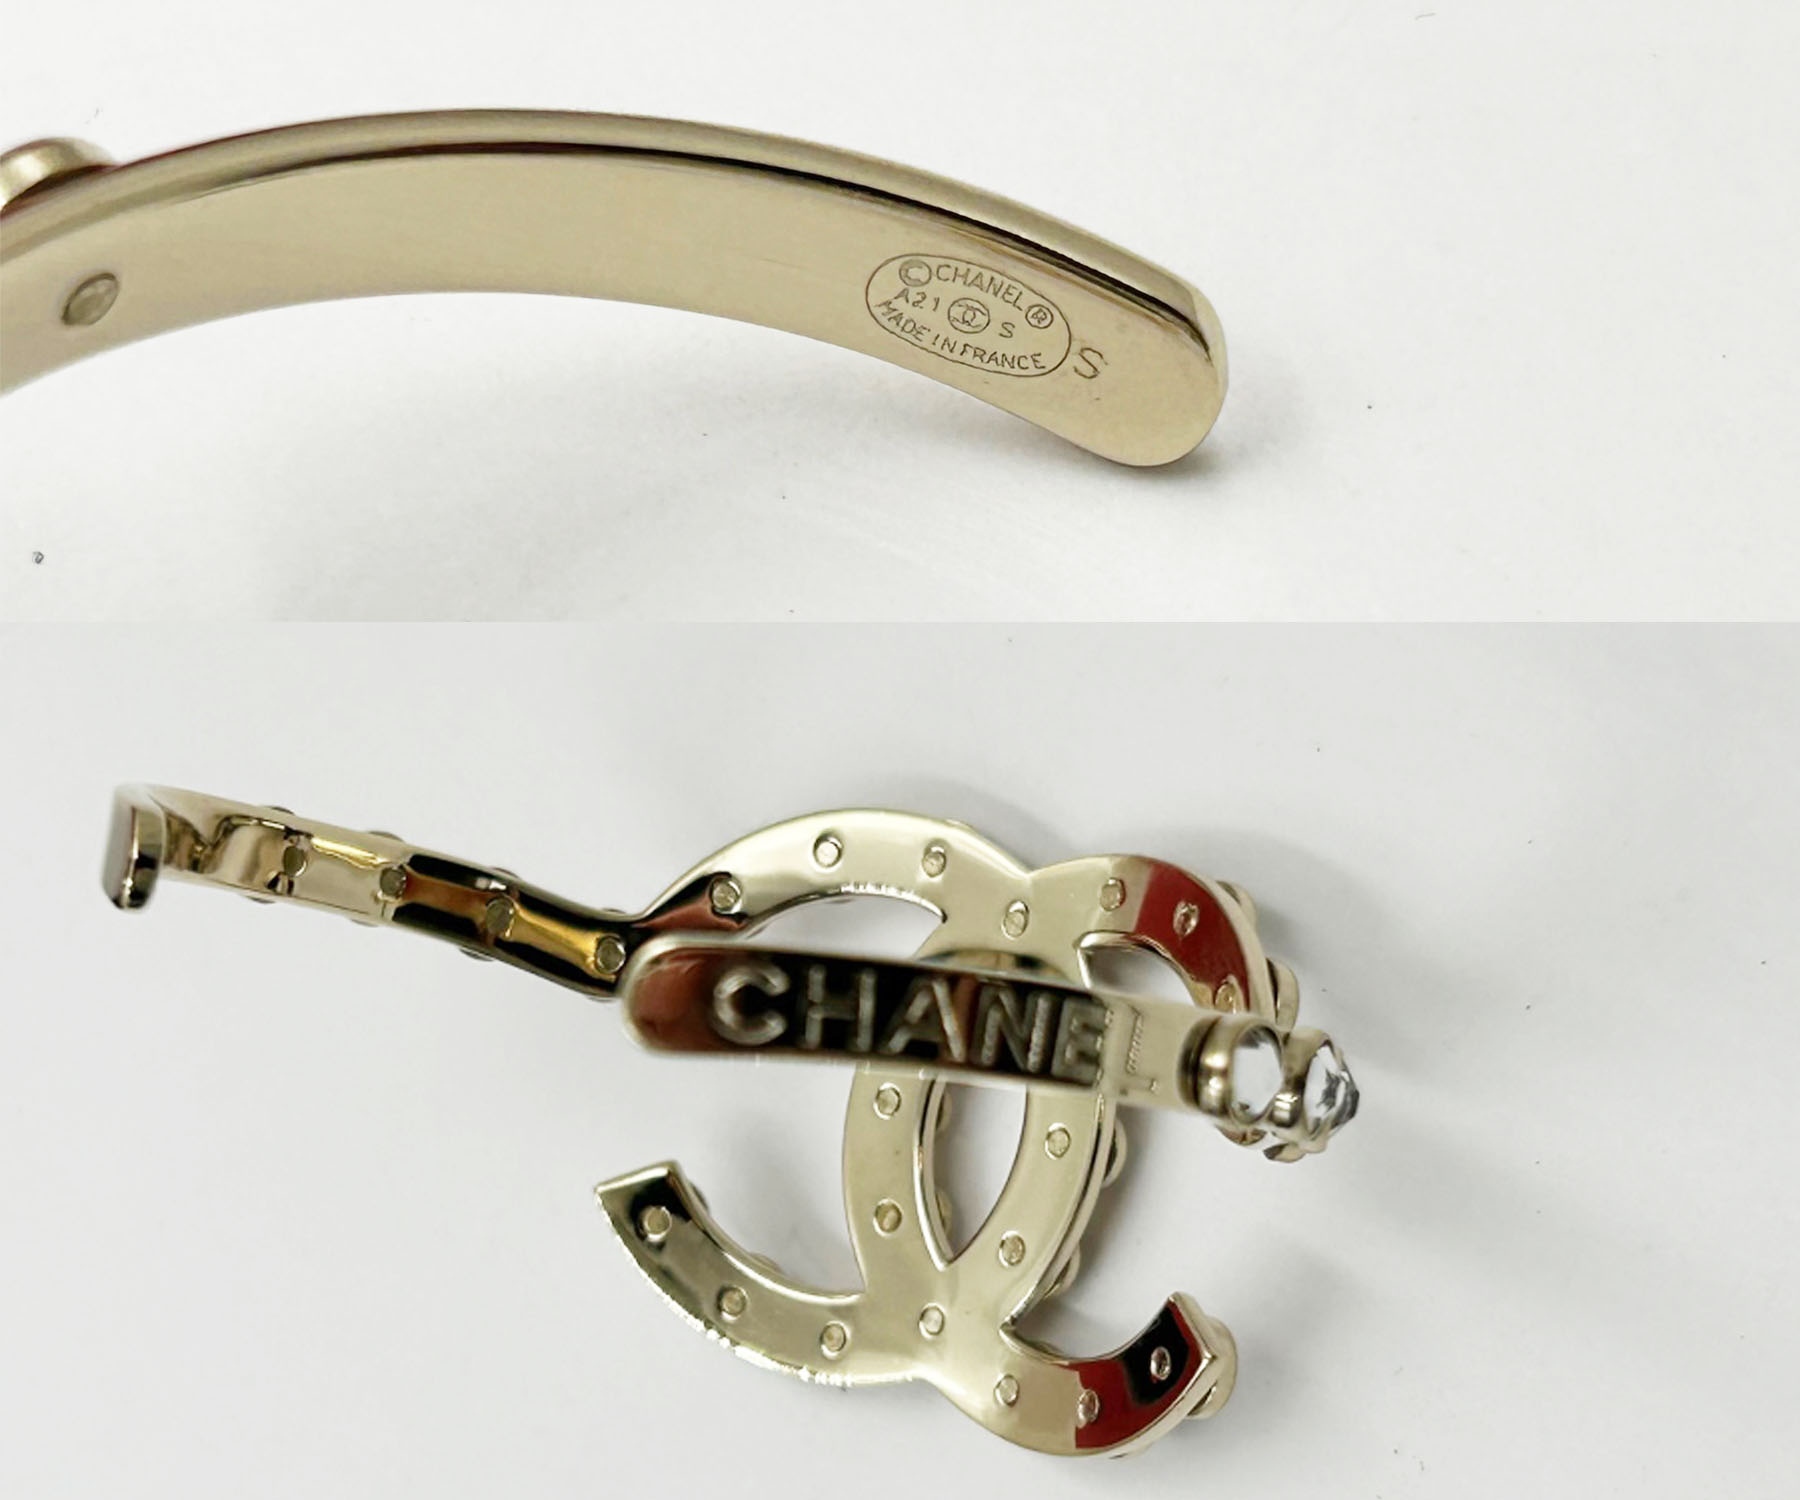 FWRD Renew Chanel Bangle Bracelet in Gold | FWRD-iangel.vn